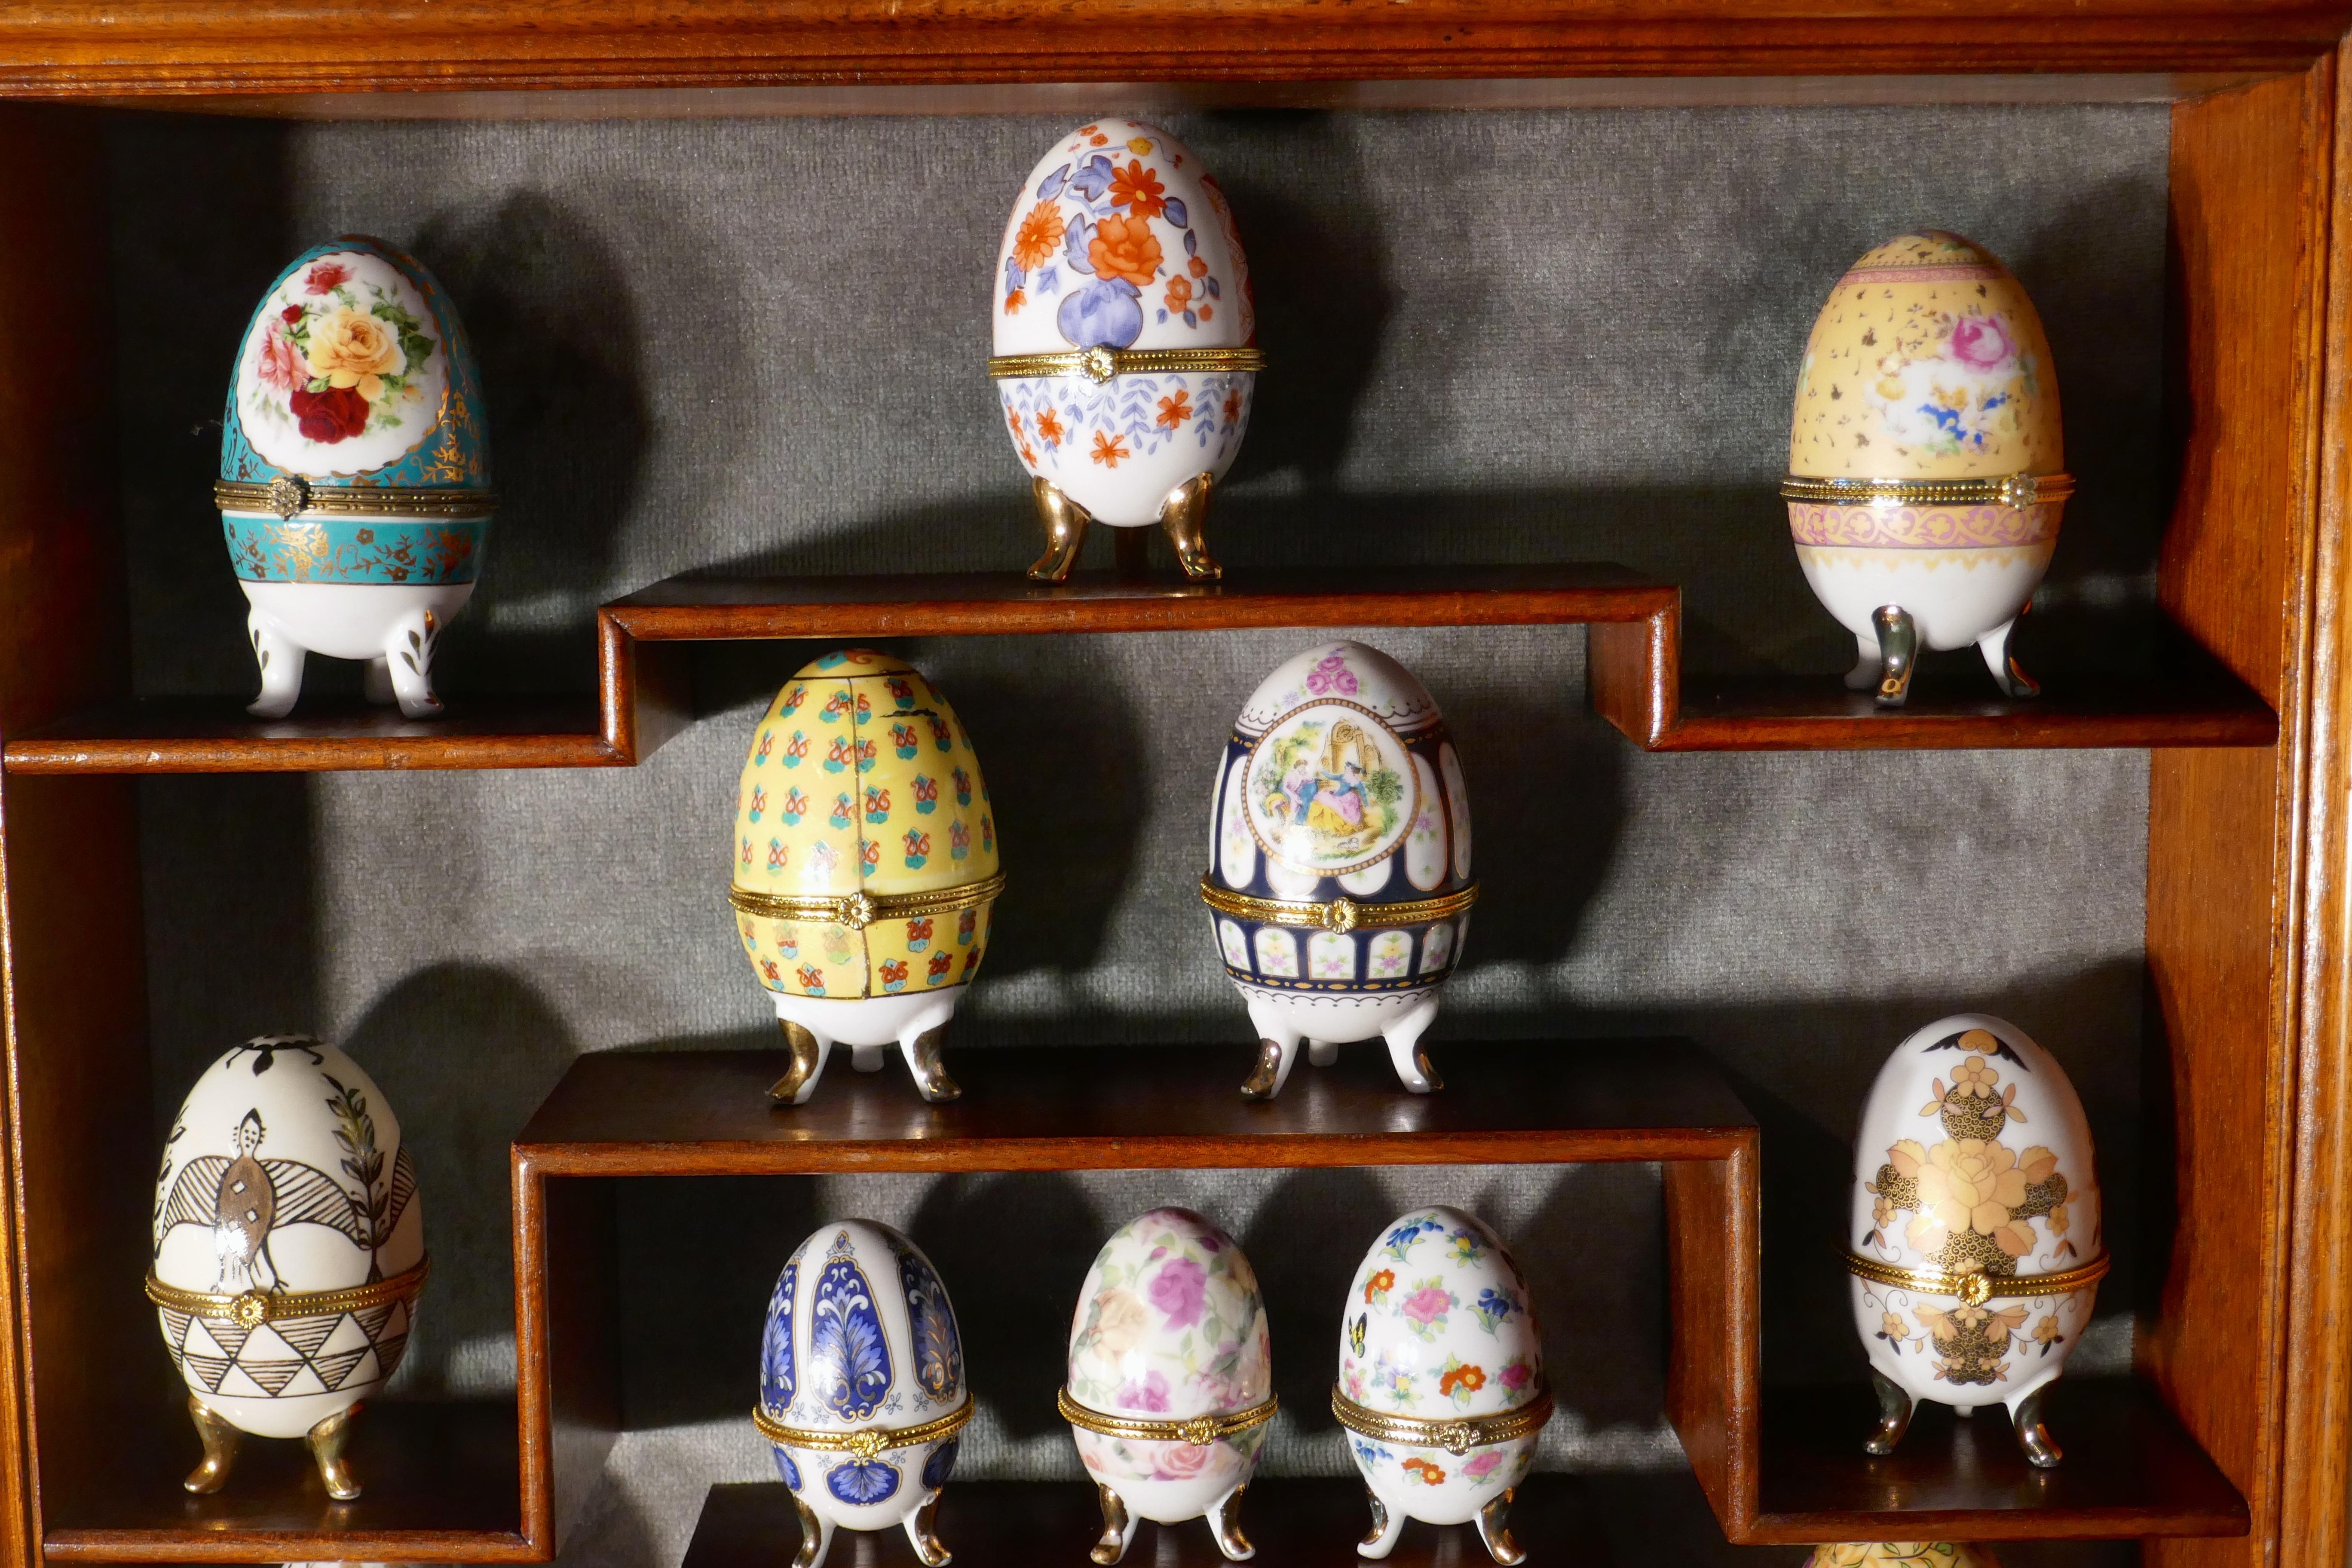 Mahogany Collection of Ceramic Egg Trinket Boxes, in Original Art Deco Display Shelf